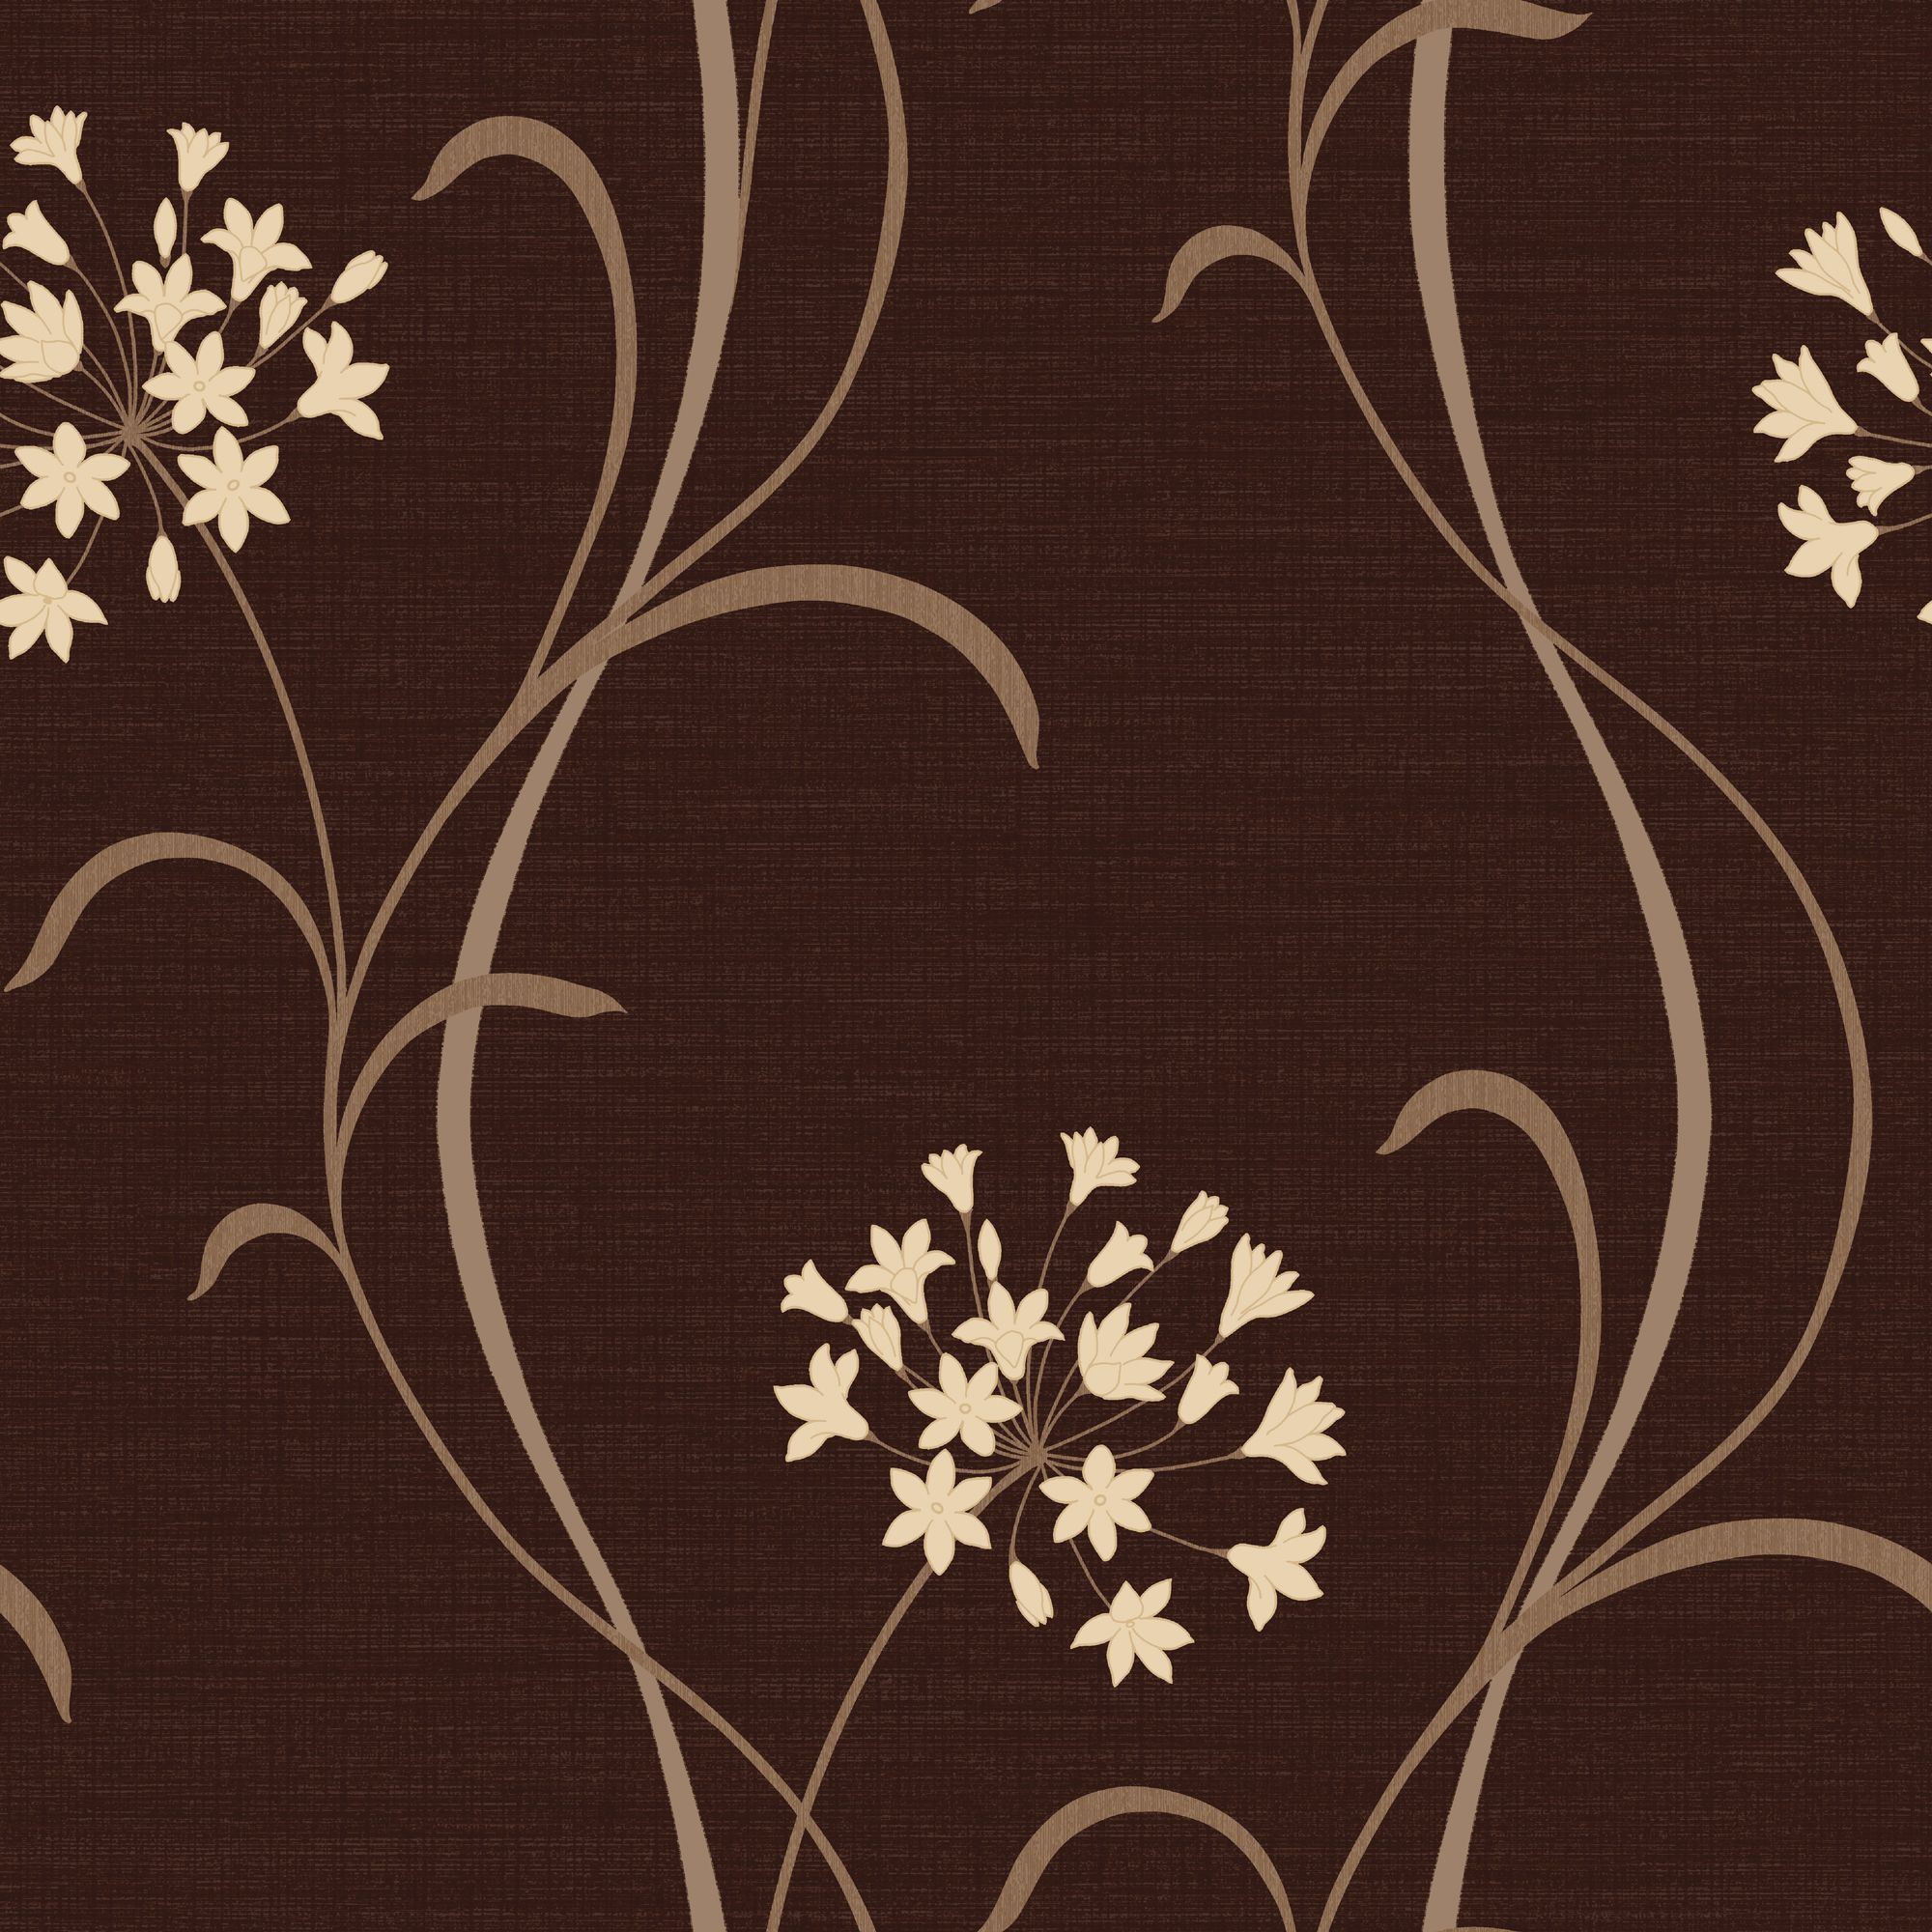 Edwardian Bloom Brown Floral Wallpaper Design By Gillian Arnold |  notonthehighstreet.com